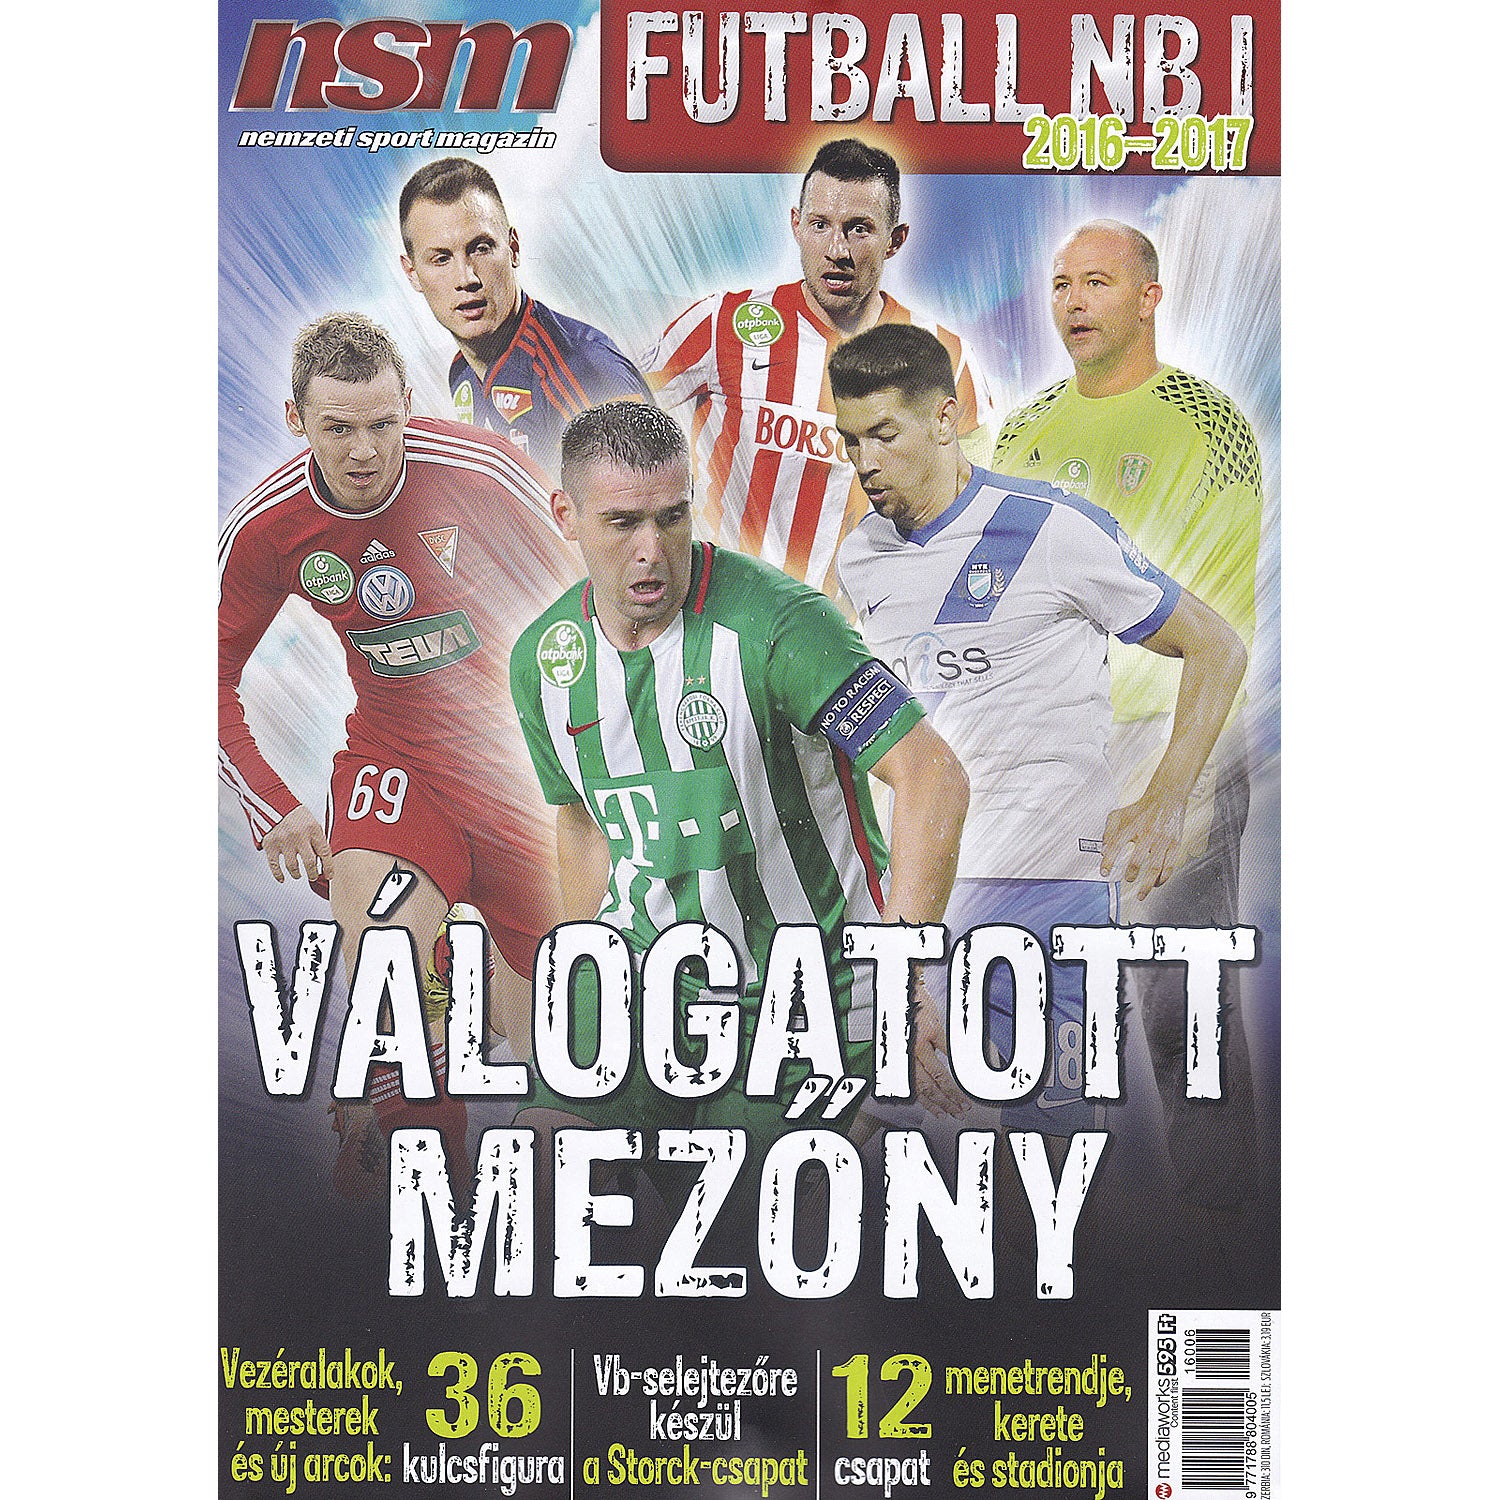 Nemzeti Sport Futball NB1 2016-2017 (Hungary Season Preview)